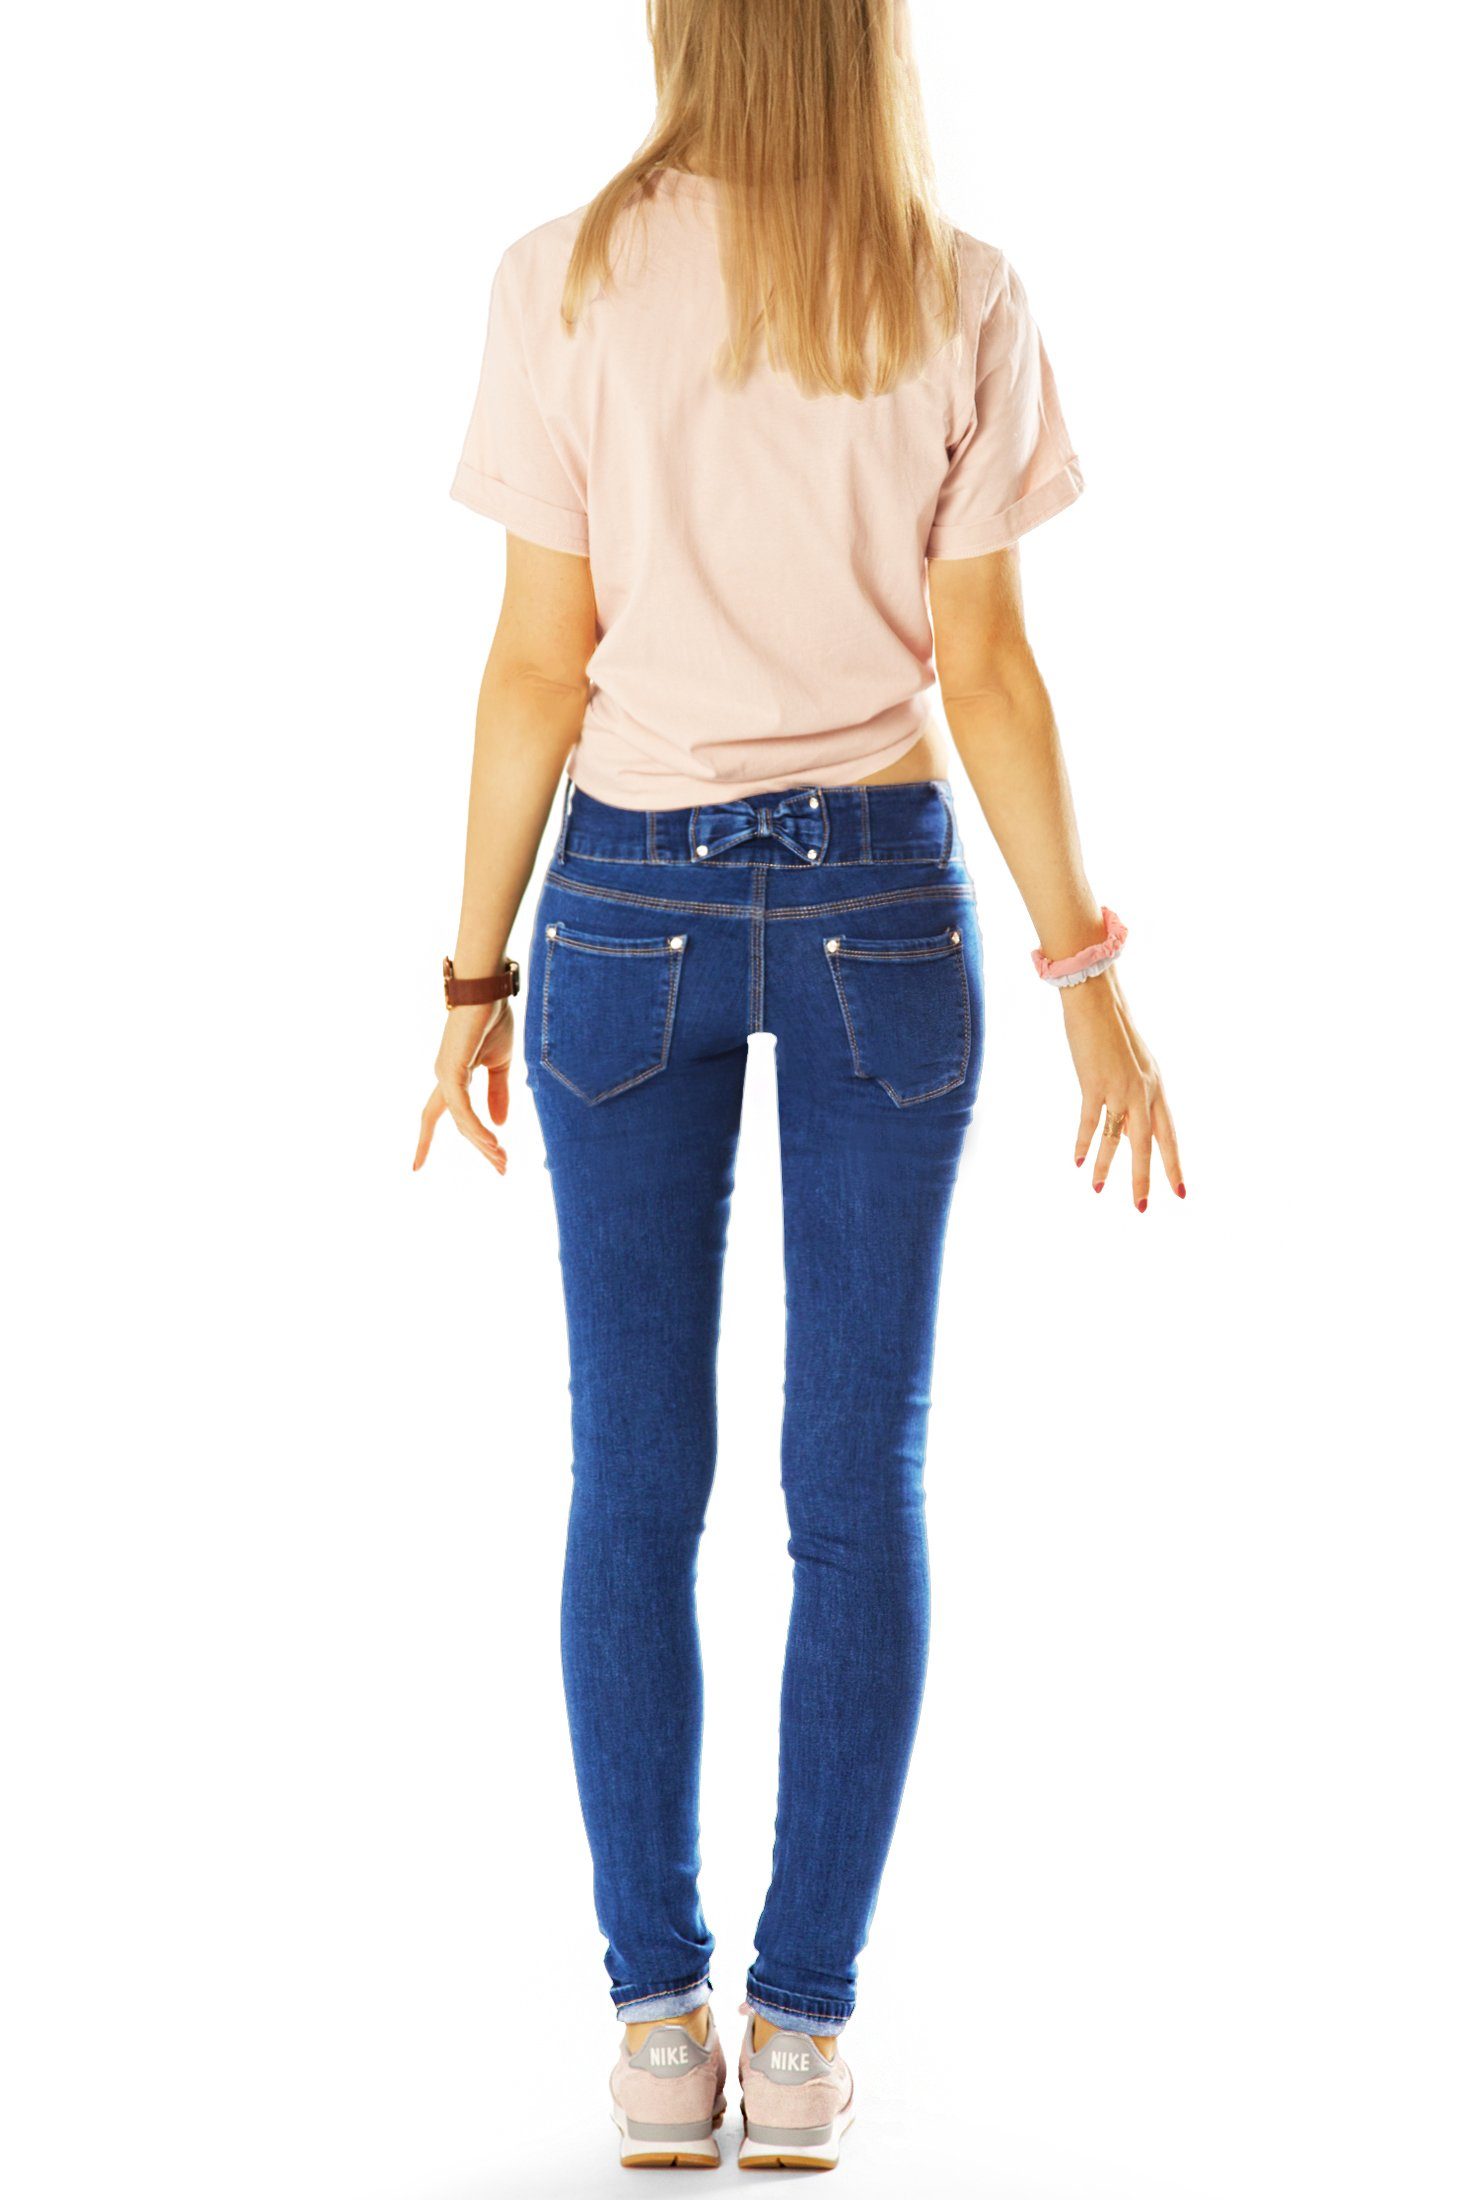 j3e-1 Röhrenjeans be Skinny Low-rise-Jeans styled - Waist 5-Pocket-Style Hüftjeans Damen Low - Hose